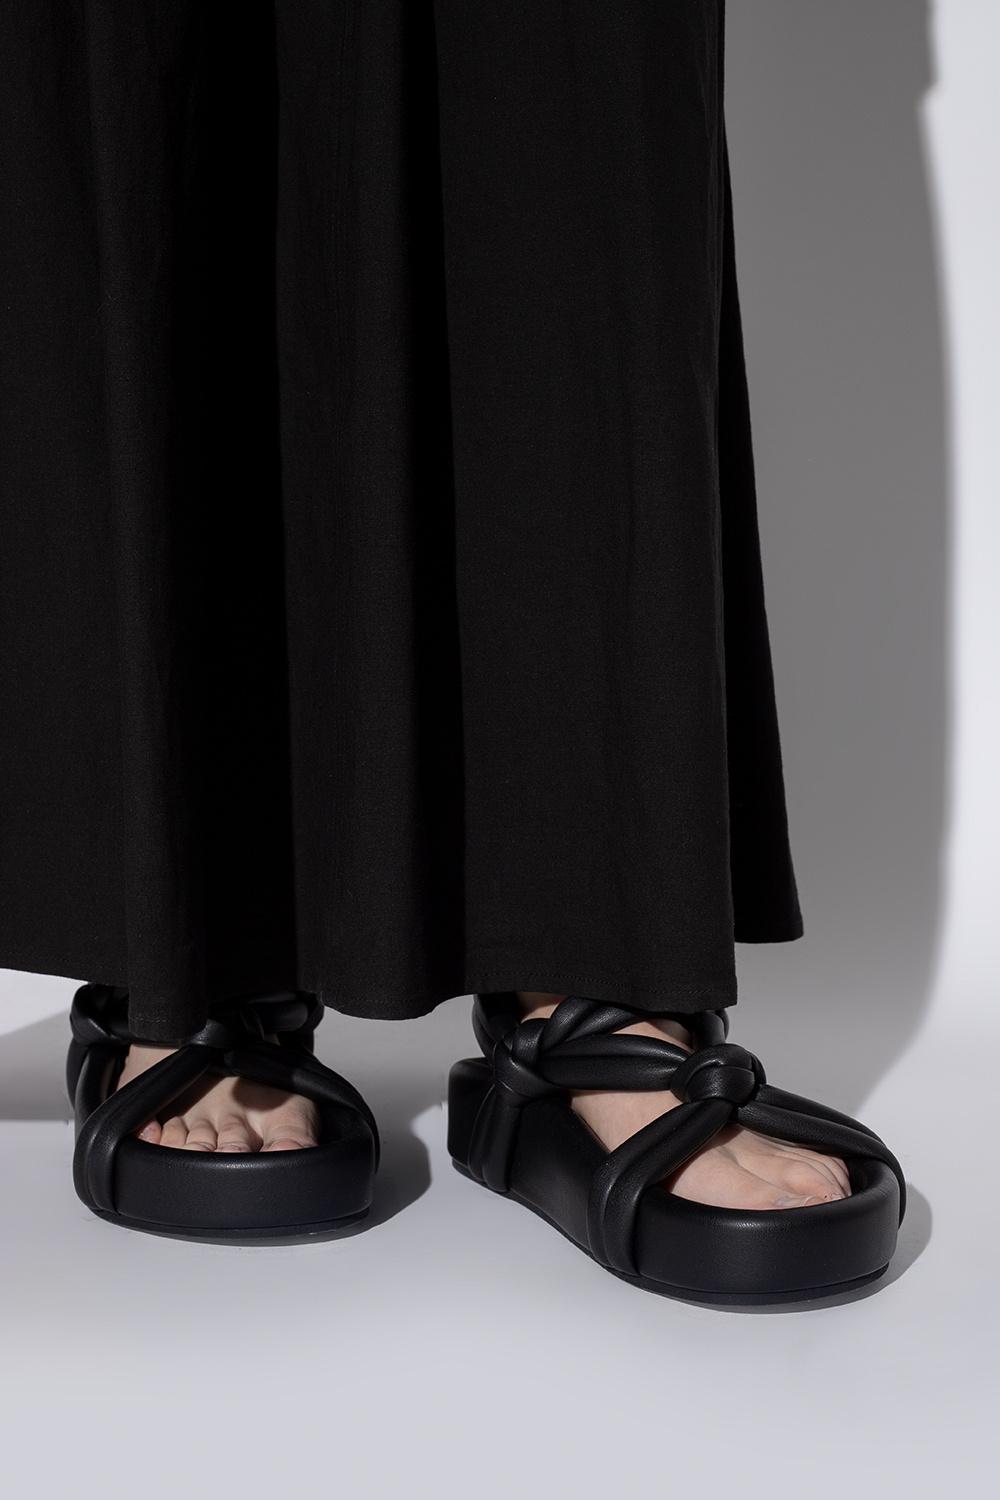 MM6 by Maison Martin Margiela 'mignon' Sandals in Black | Lyst